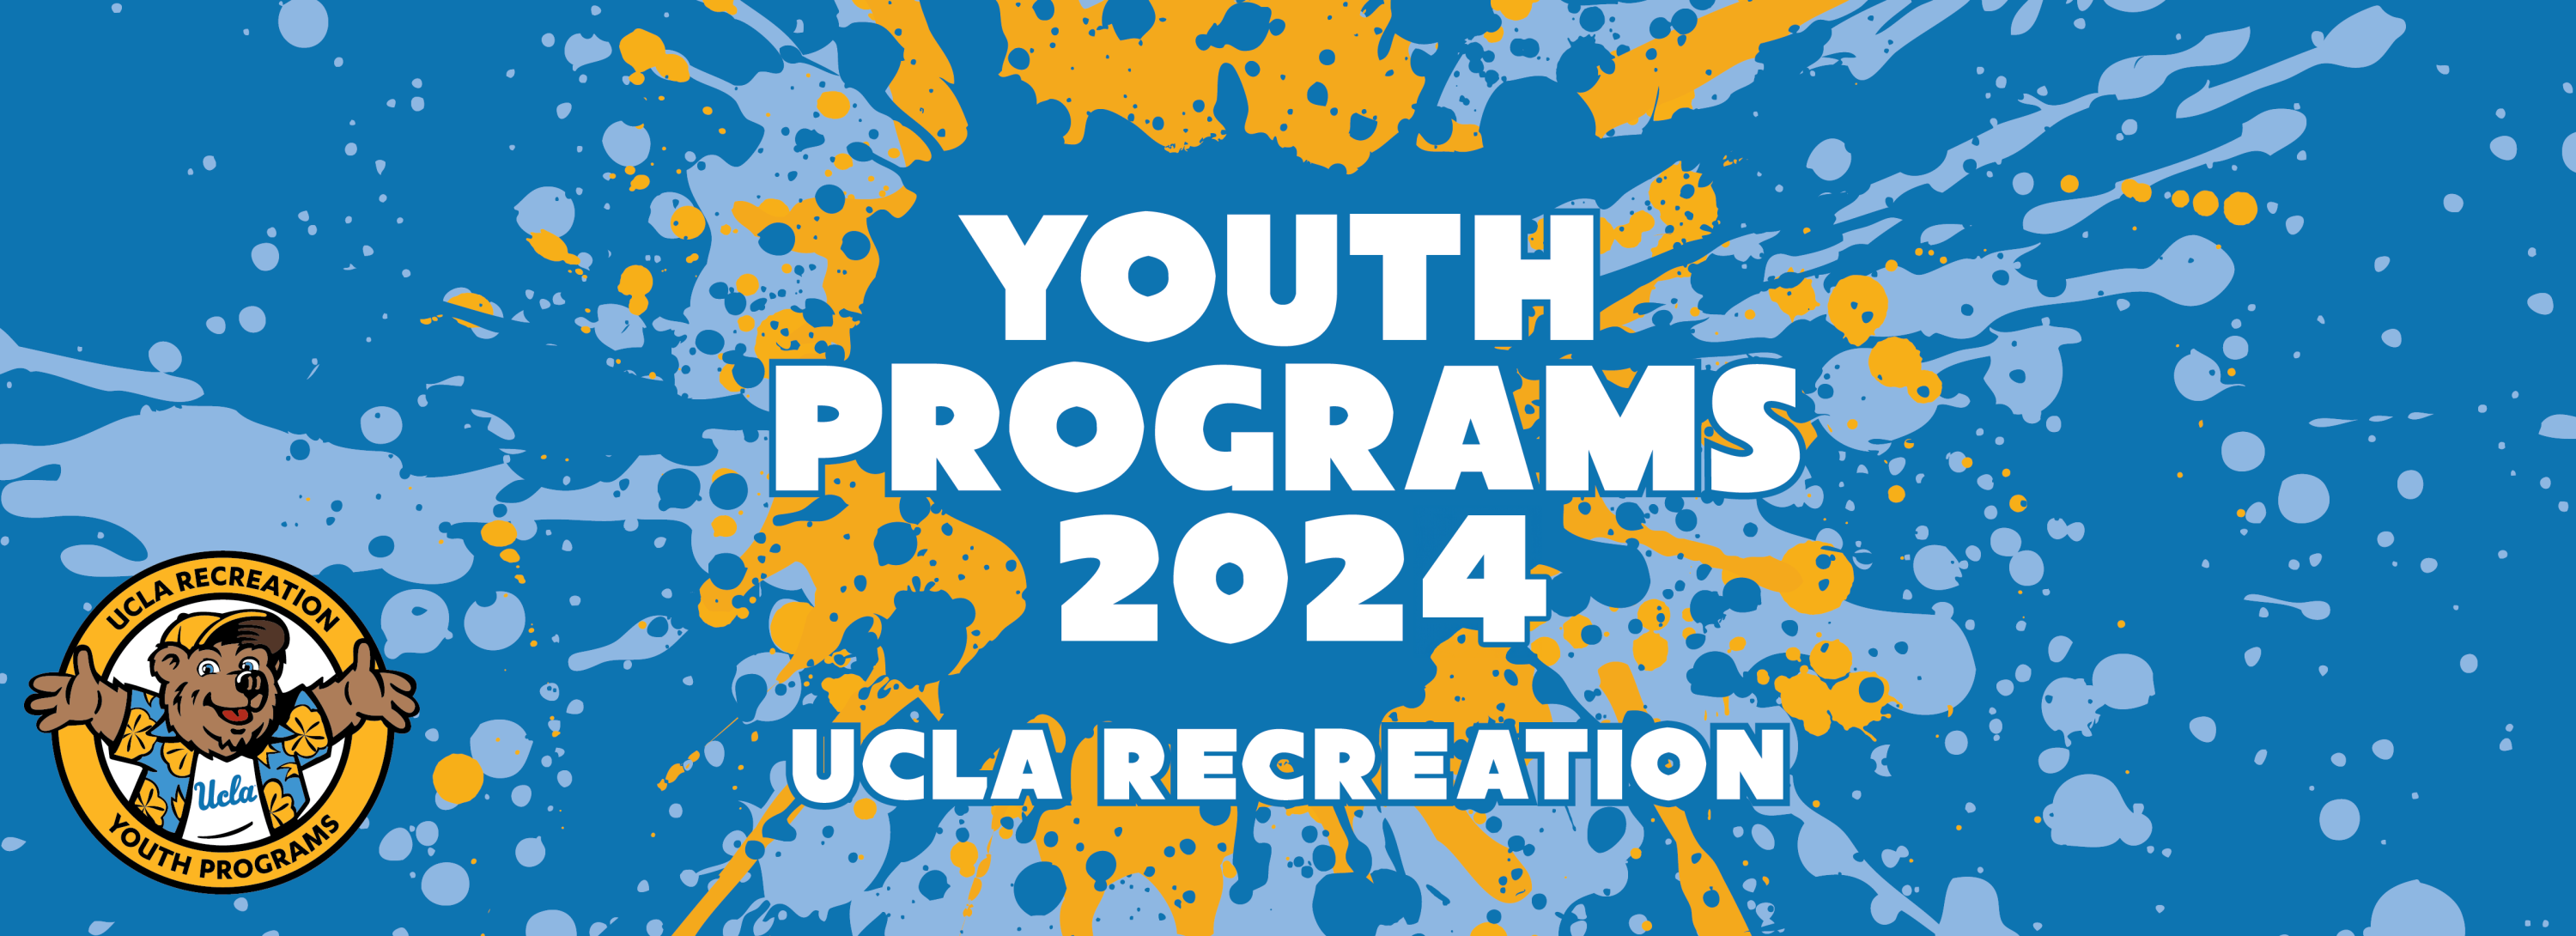 Youth Programs 2024 UCLA Recreation